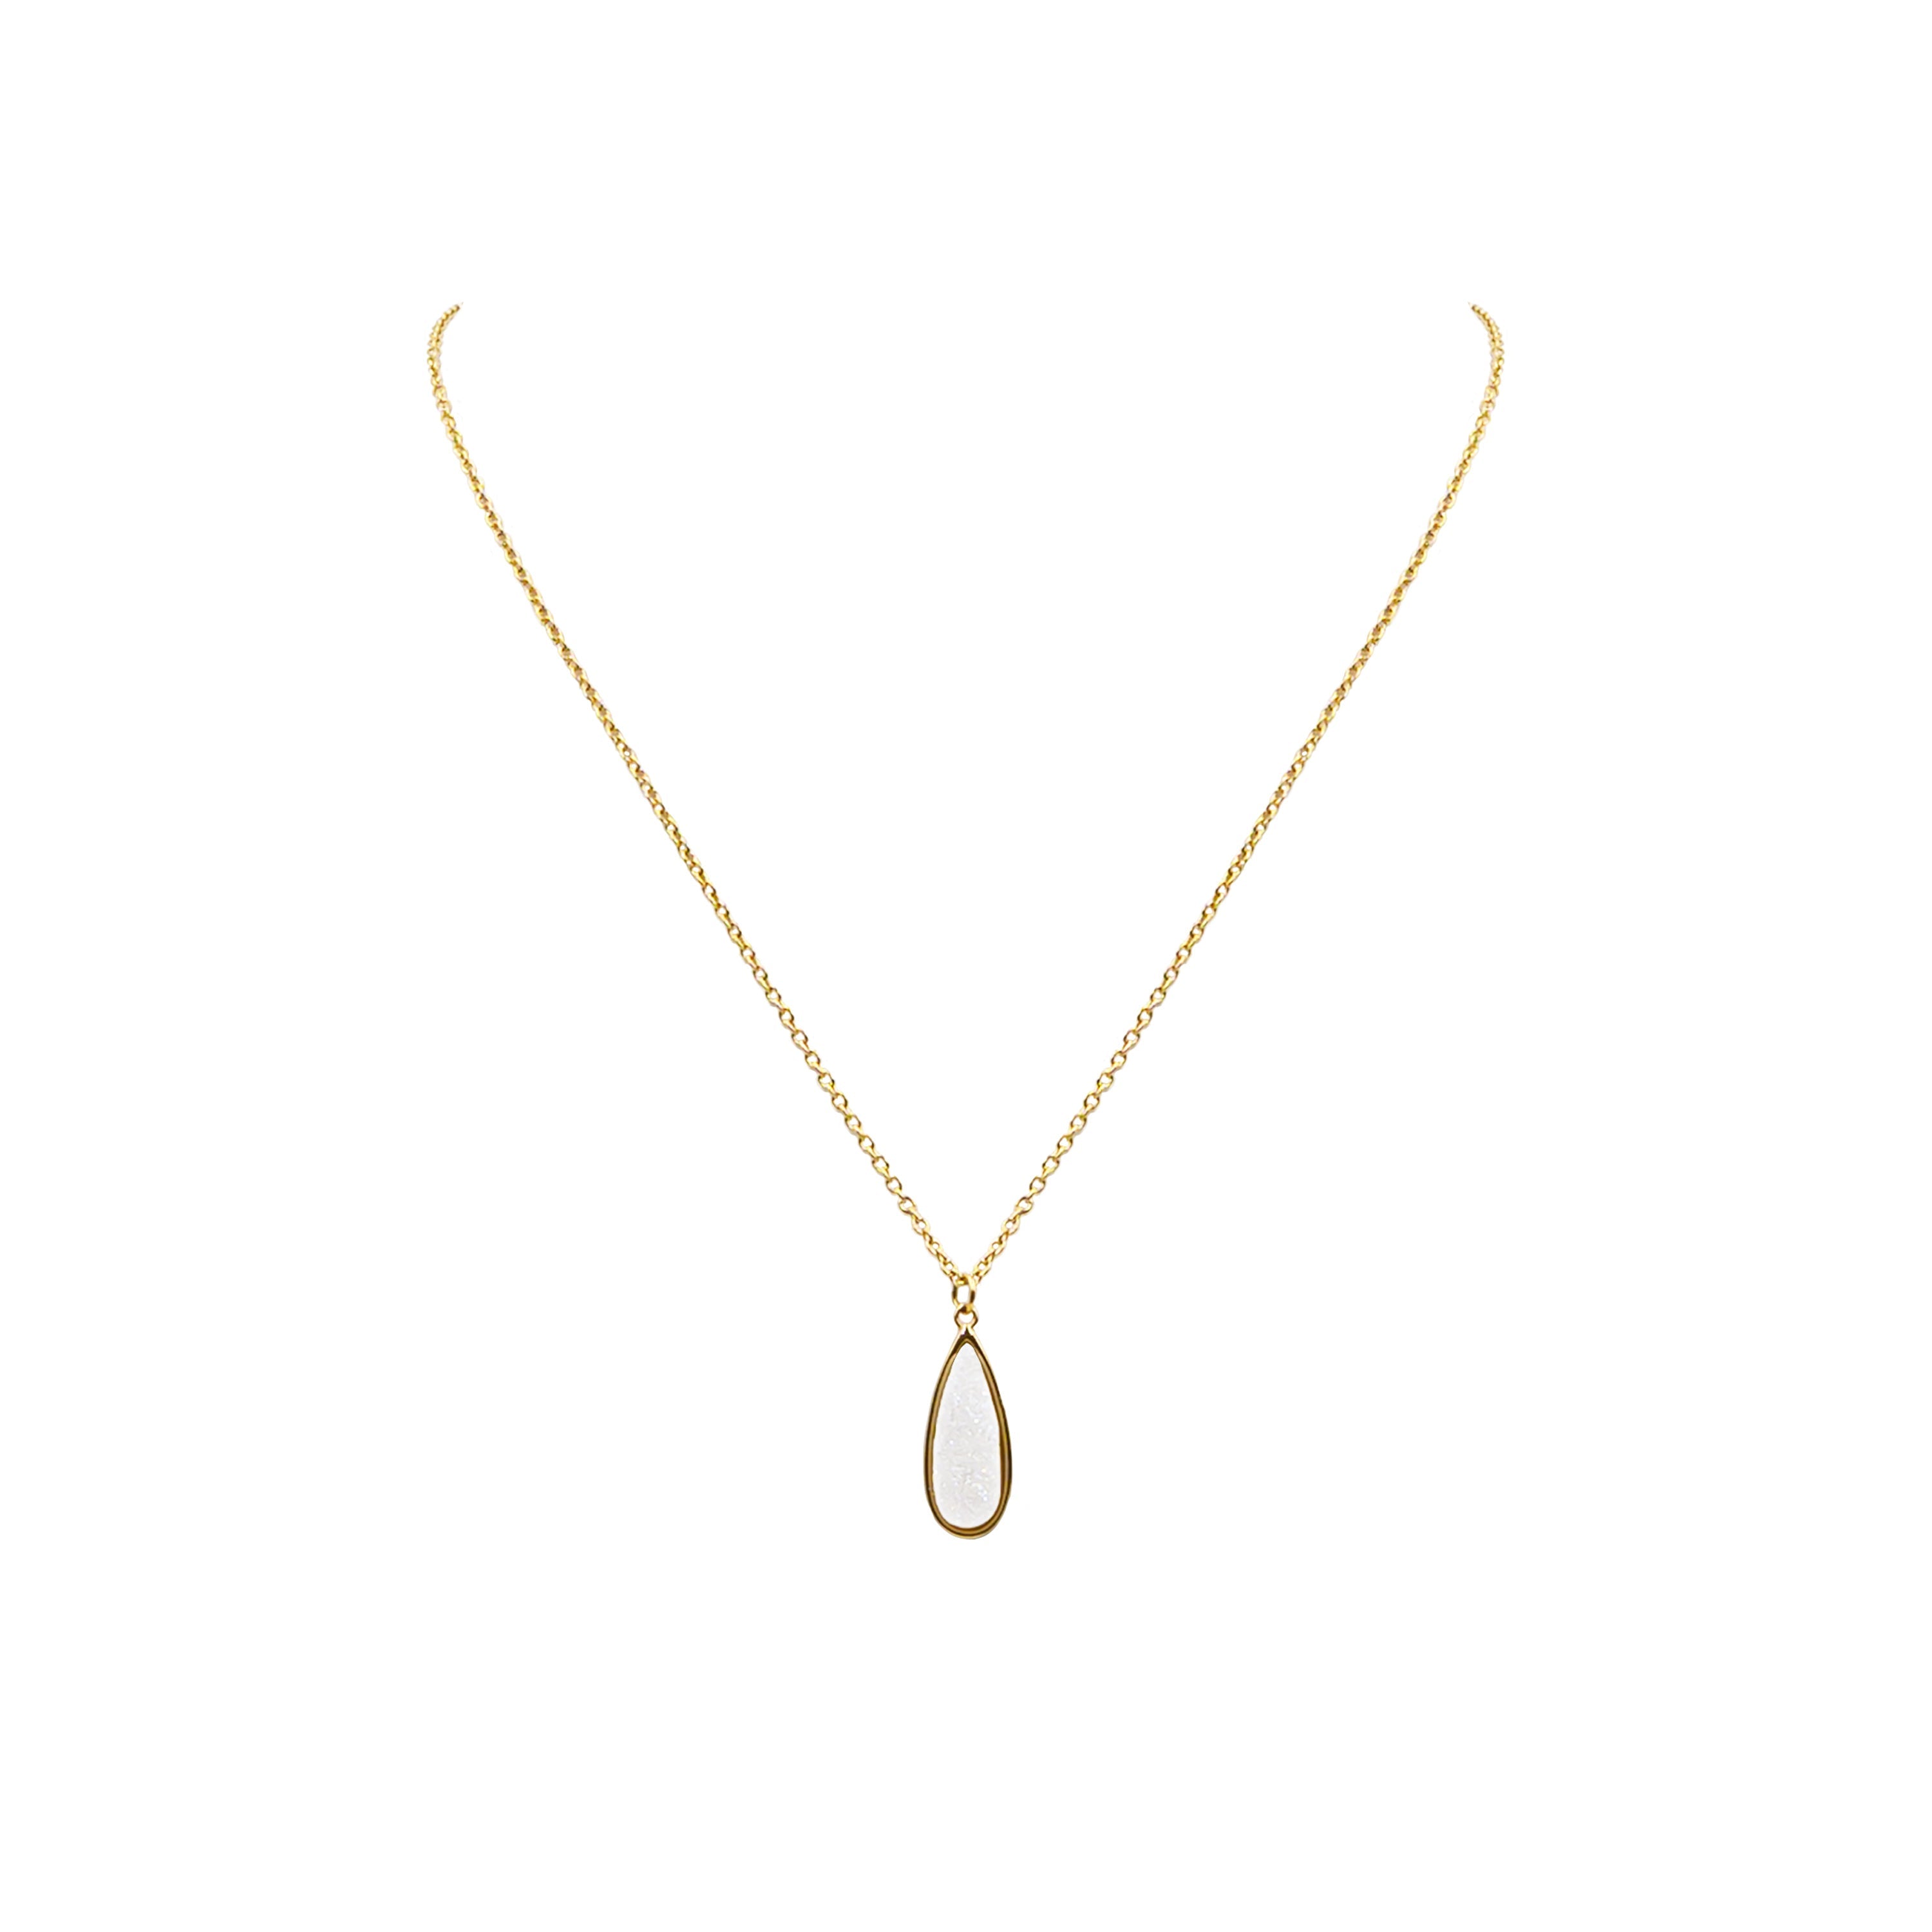 Druzy Collection - Petite Quartz Drop Necklace fine designer jewelry for men and women